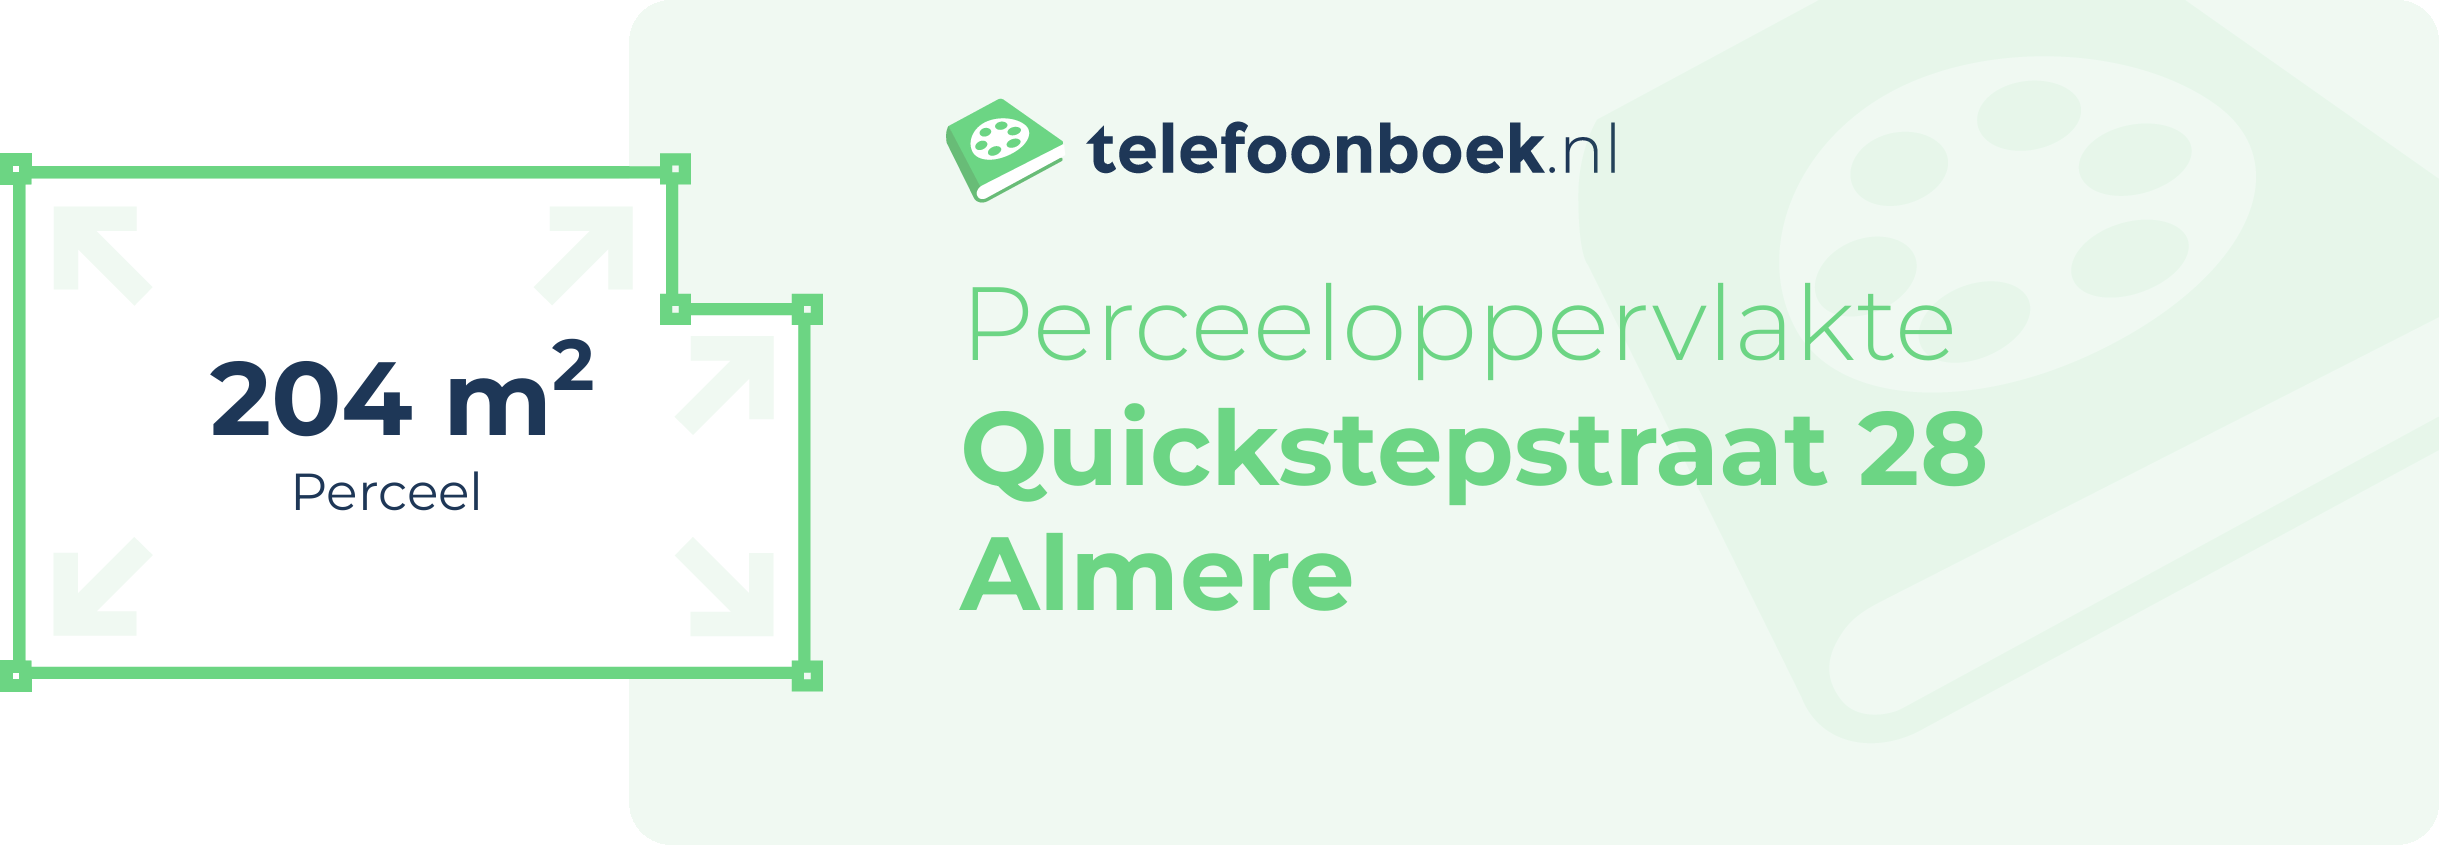 Perceeloppervlakte Quickstepstraat 28 Almere